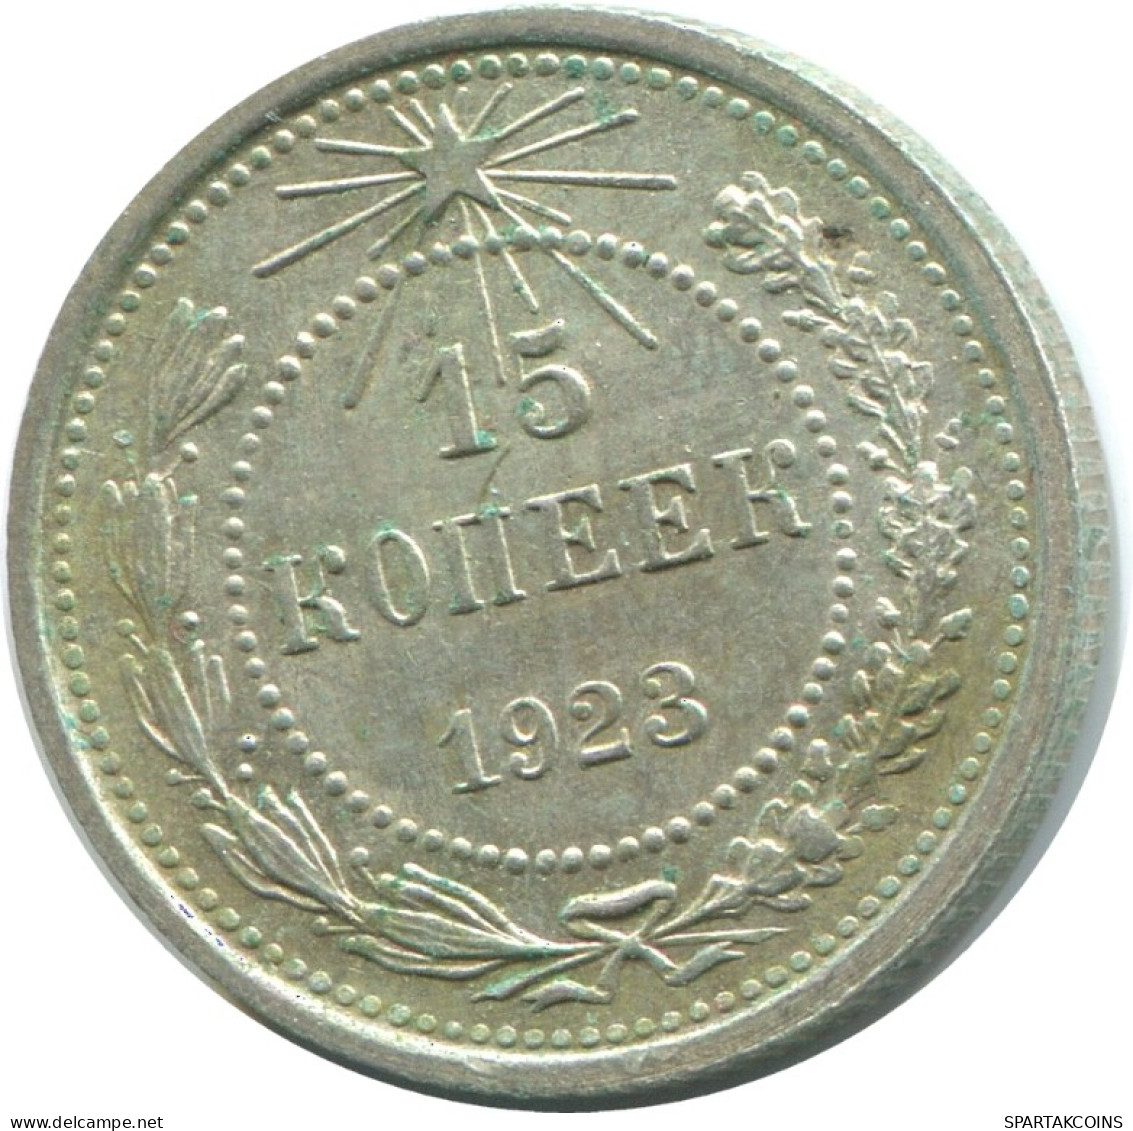 15 KOPEKS 1923 RUSSIA RSFSR SILVER Coin HIGH GRADE #AF162.4.U.A - Russia